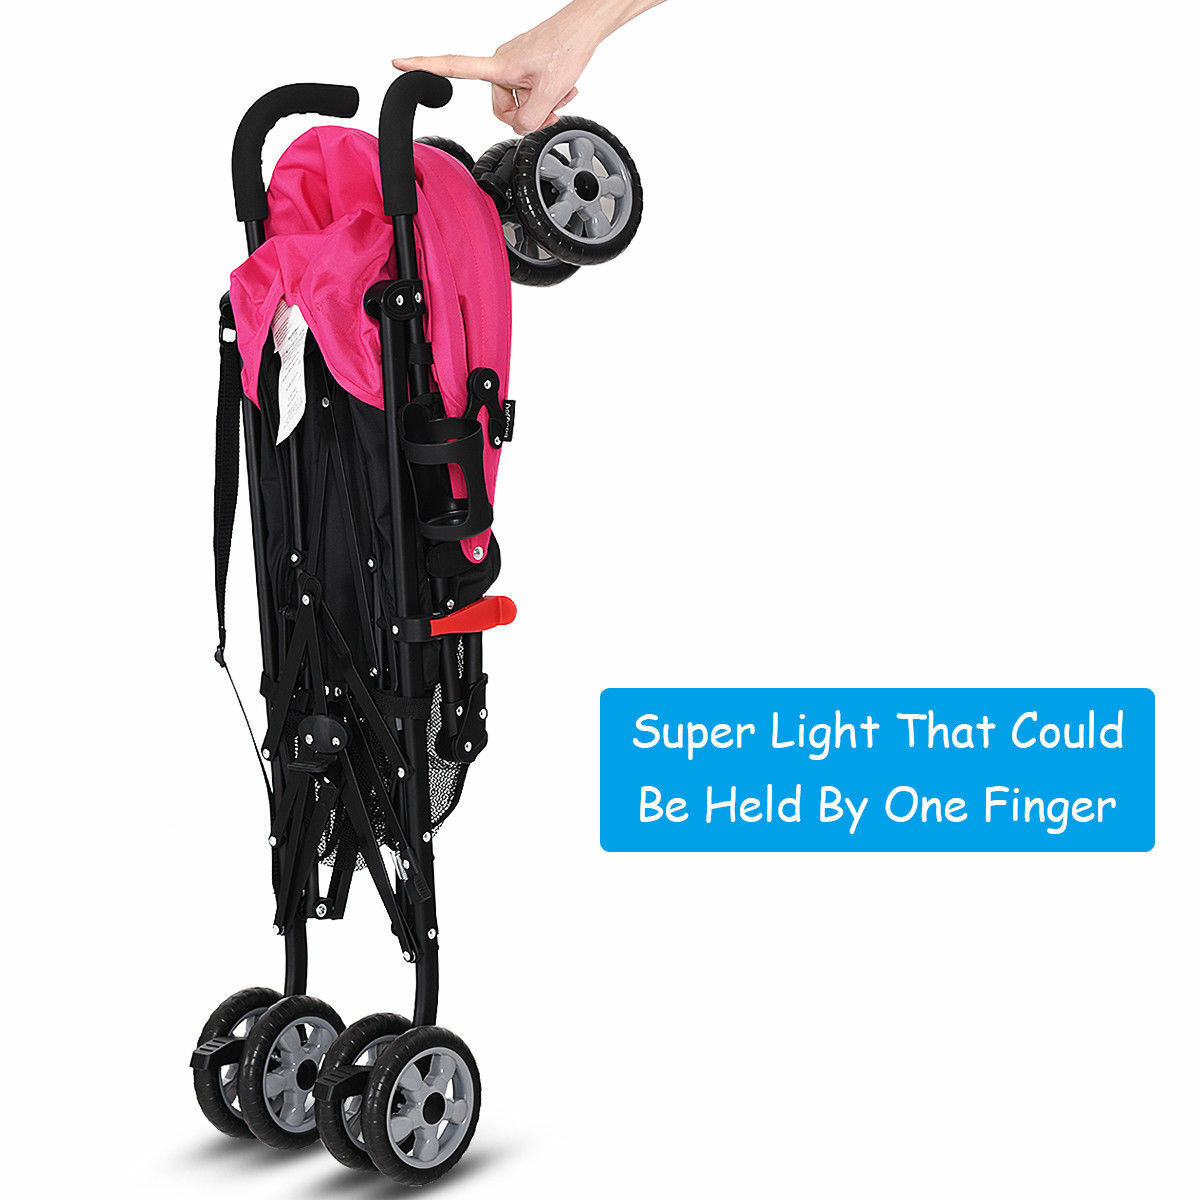 Lightweight baby. Открой коляски. Quick Smart easy Fold Stroller. Light Weight Baby аксессуар. Лайт Вэйт бейби.